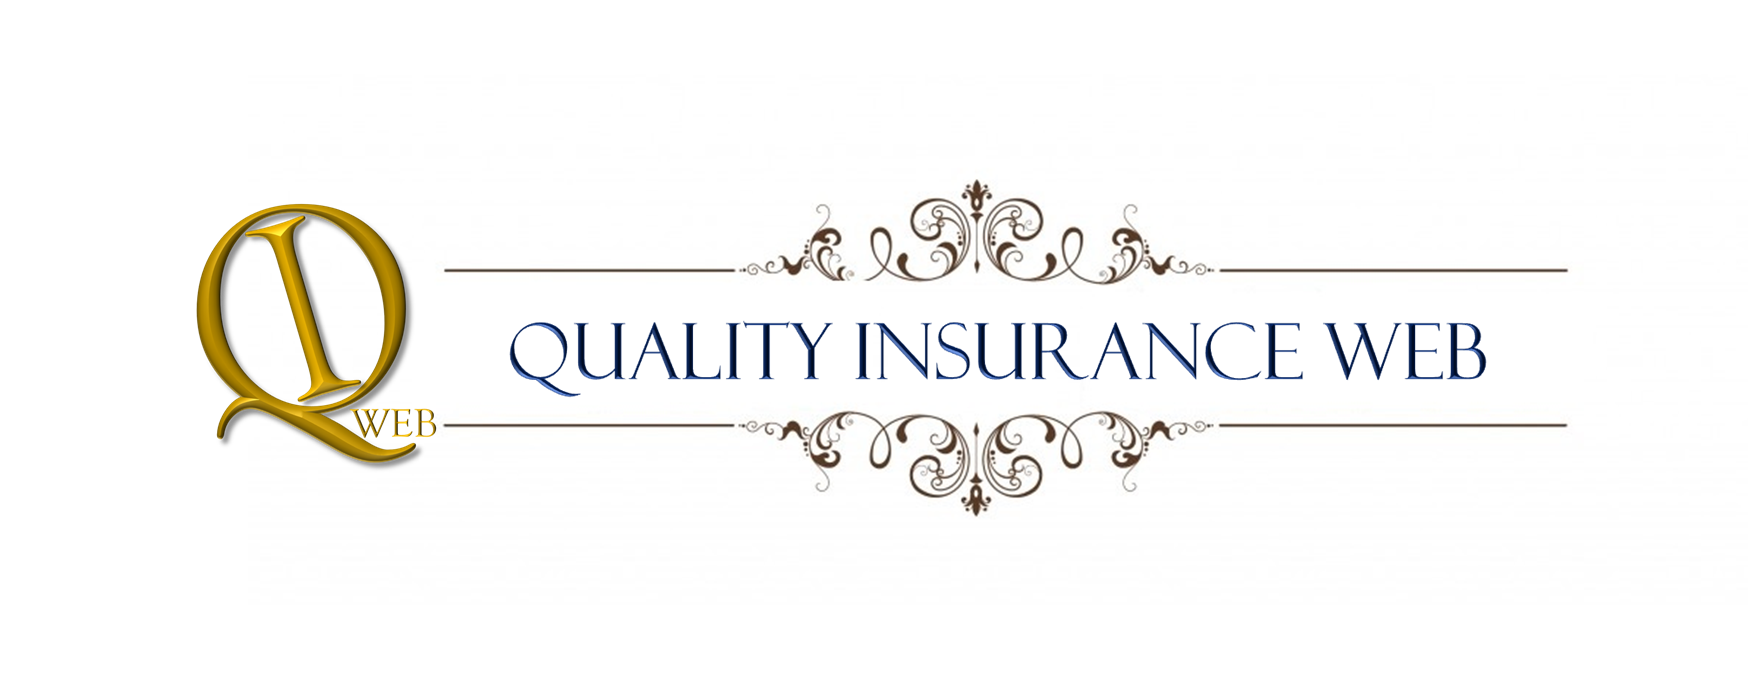 Quality Insurance Web-         